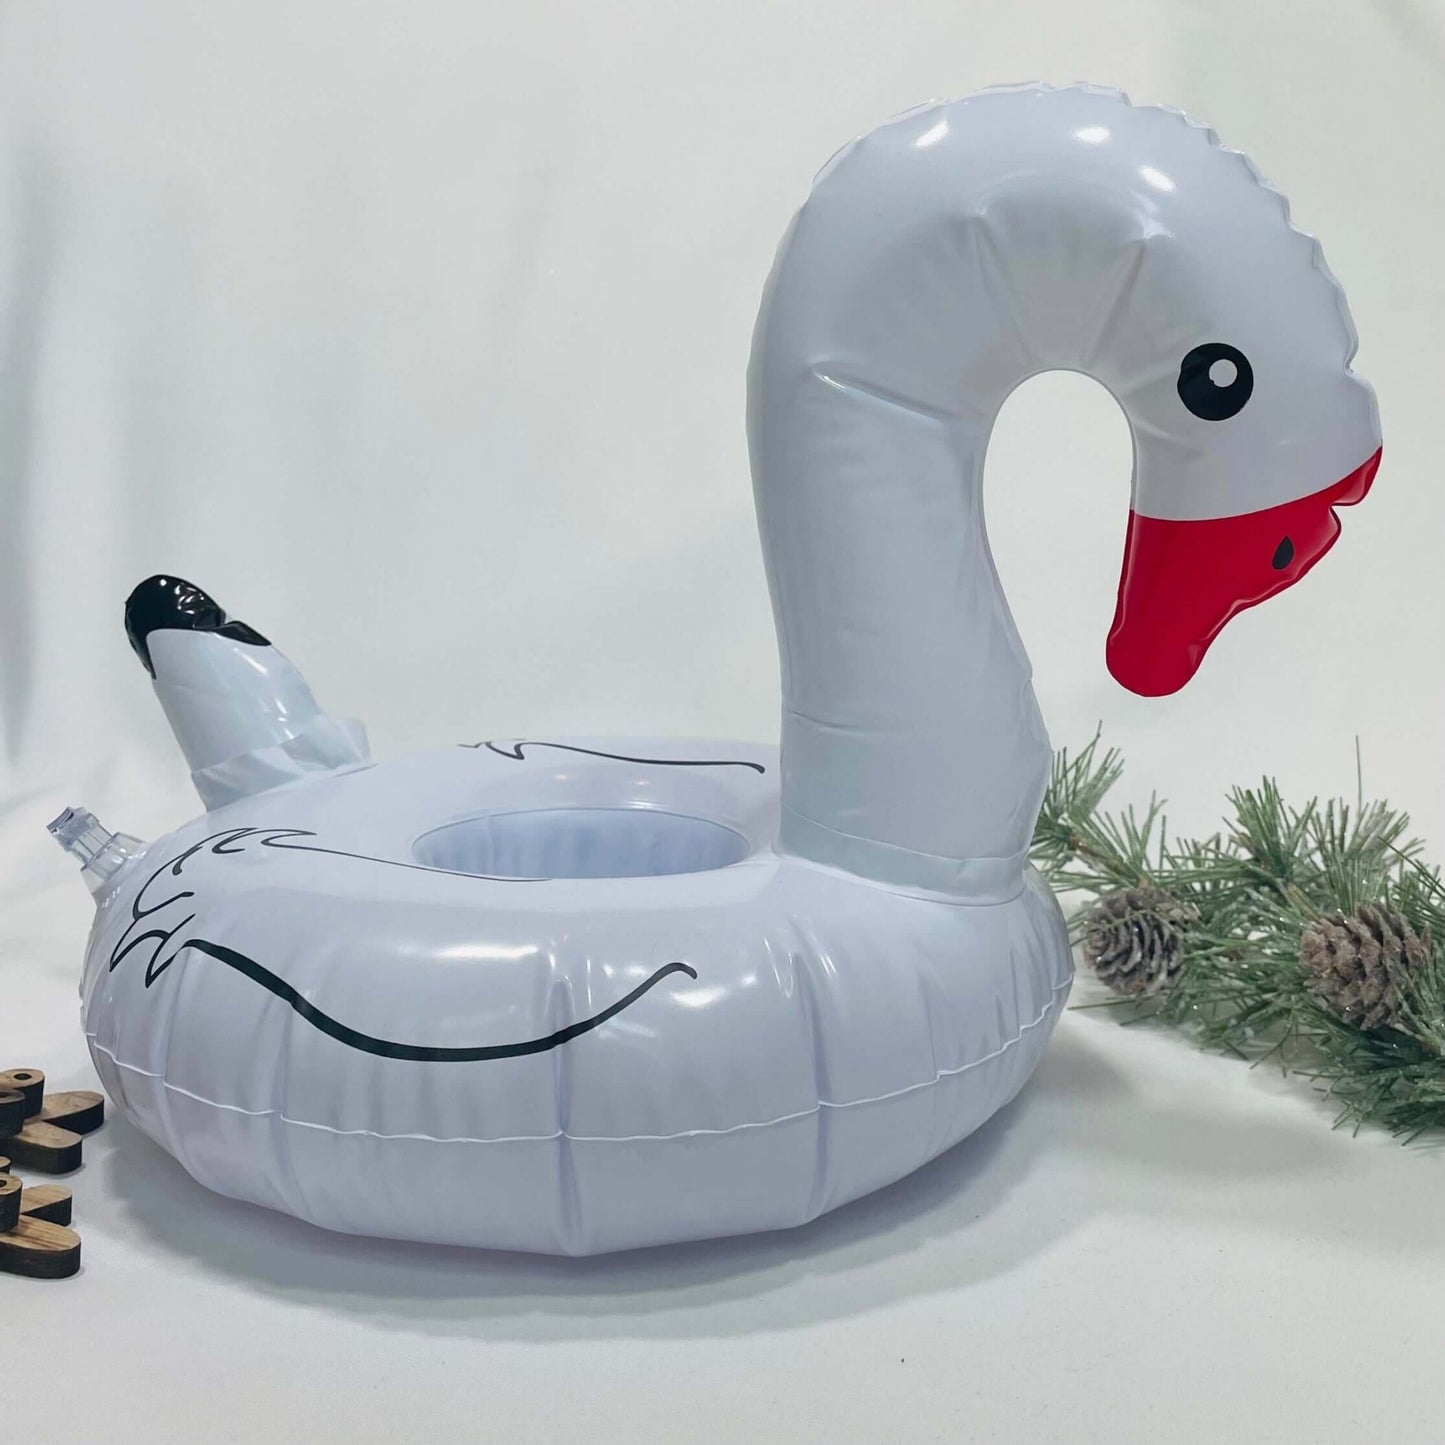 Inflatable Elf Pool Float - Elf Antics